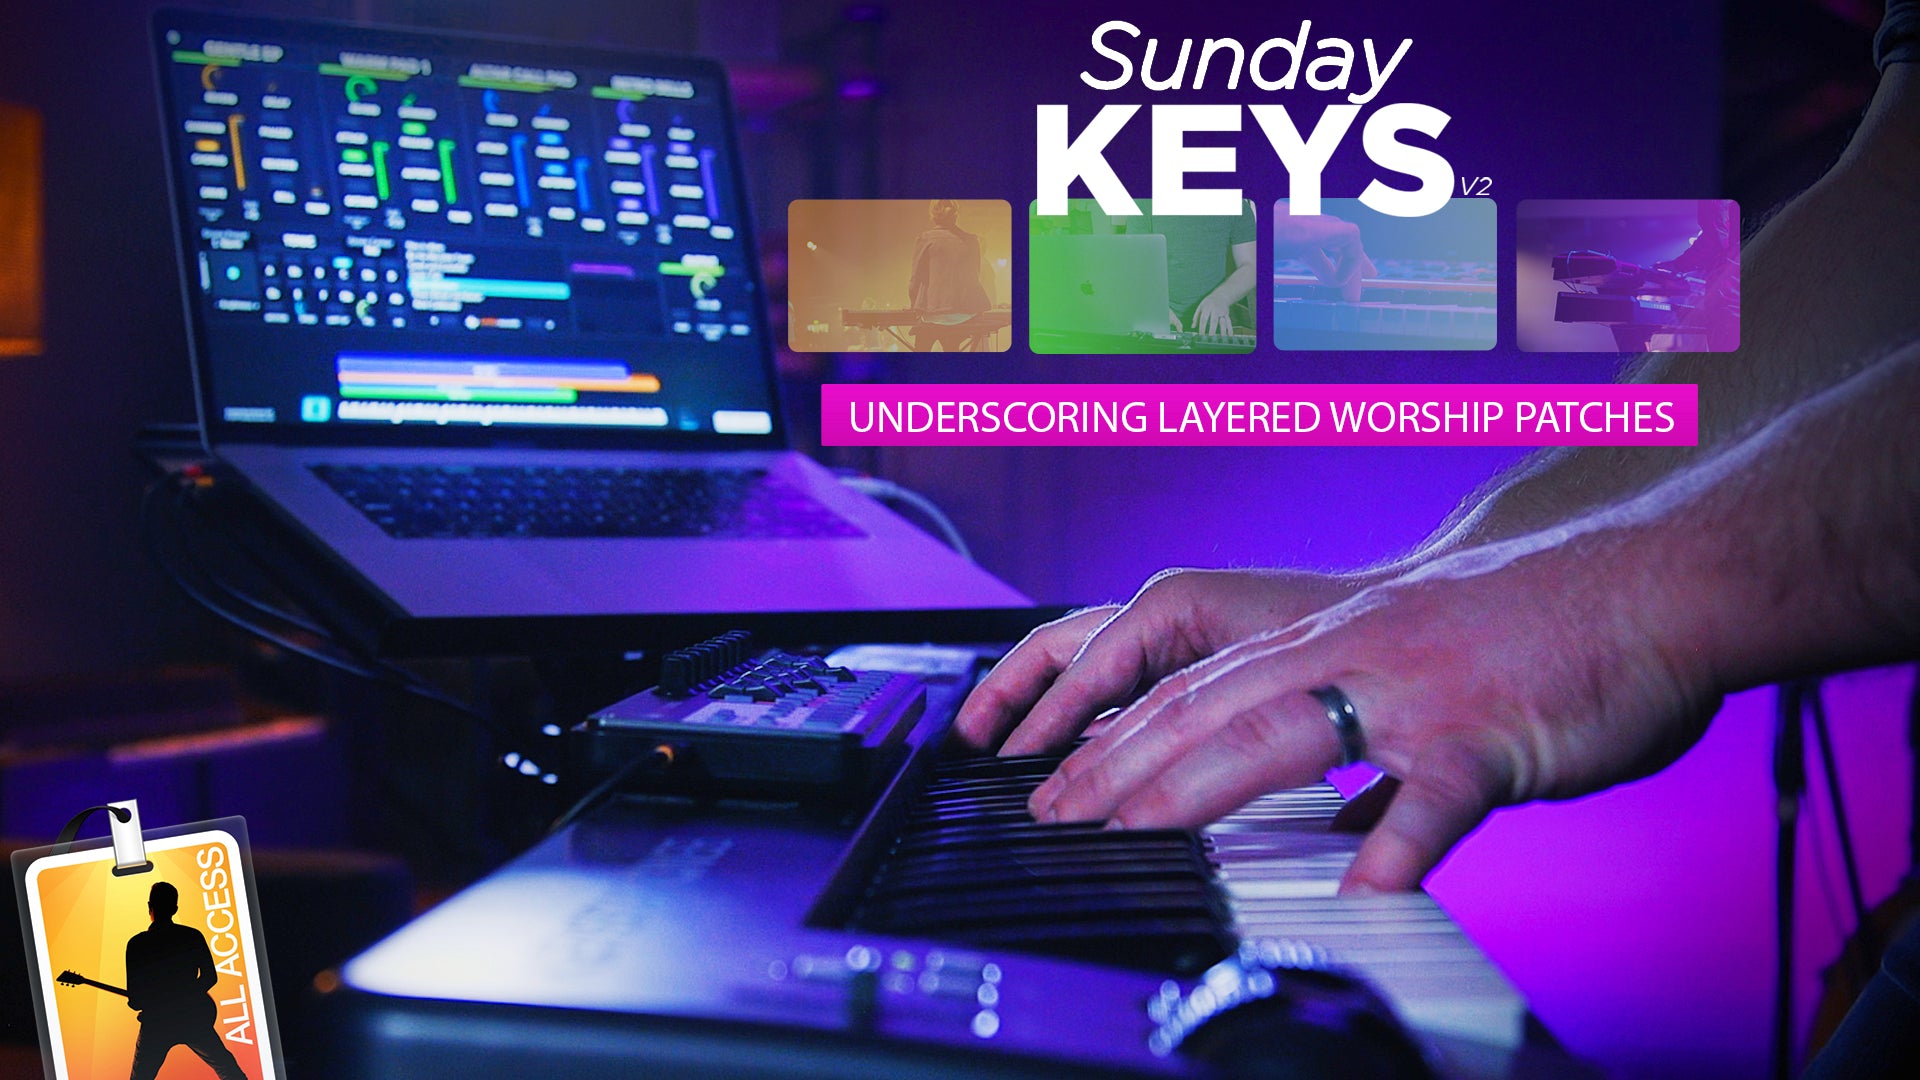 MainStage Underscoring Layered Worship Keys Patches Demo - Sunday Keys Version 2